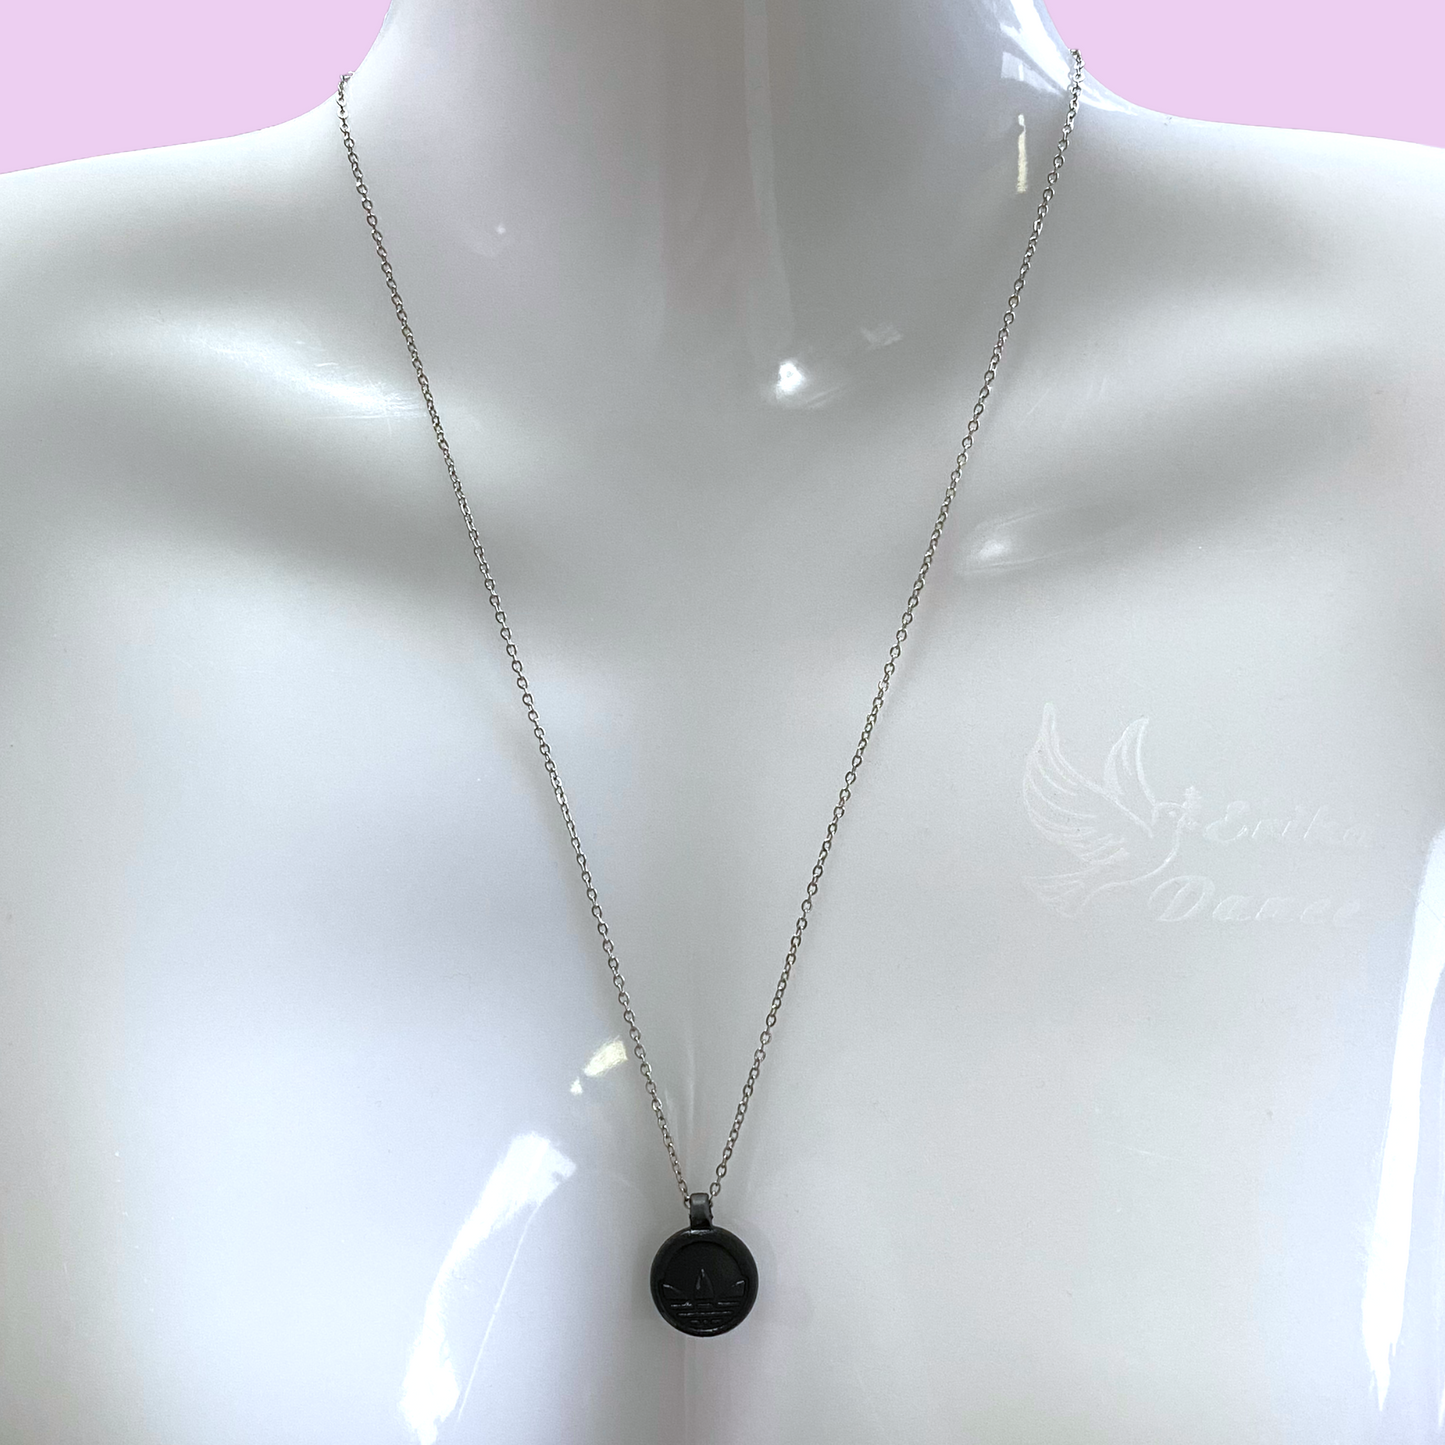 Reworked black sporty necklace